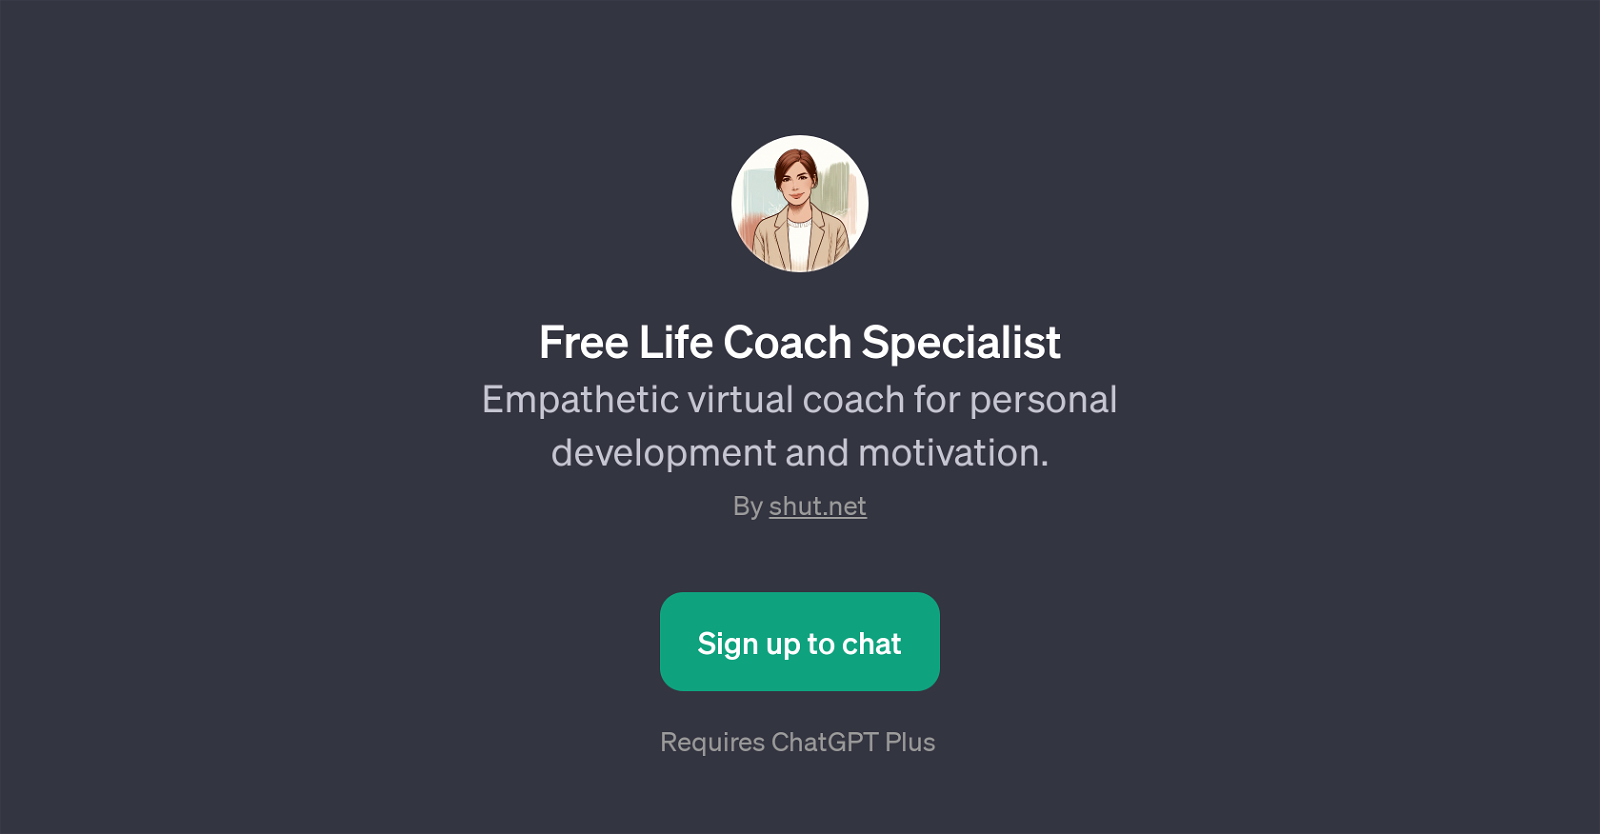 Free Life Coach Specialist website